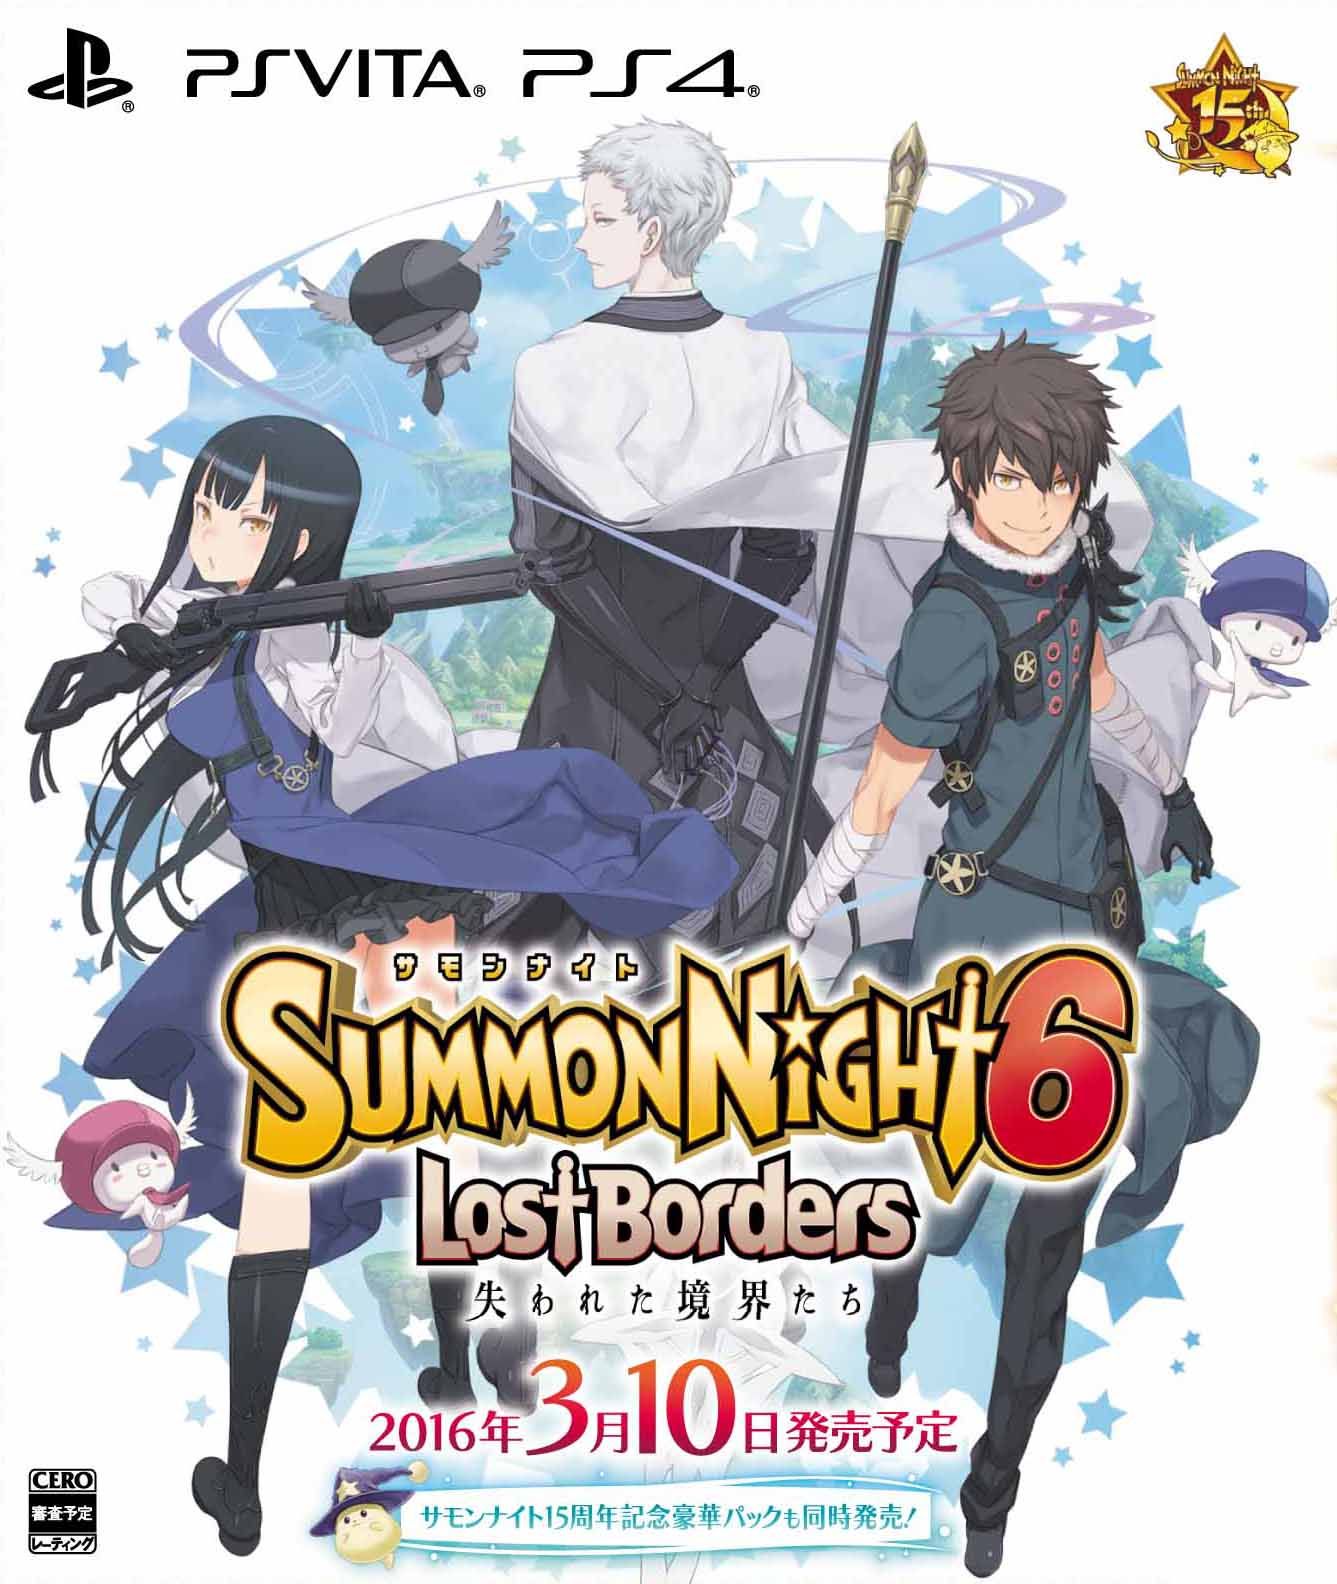 summon-night-6-lost-border-boxart-limited-edition-02